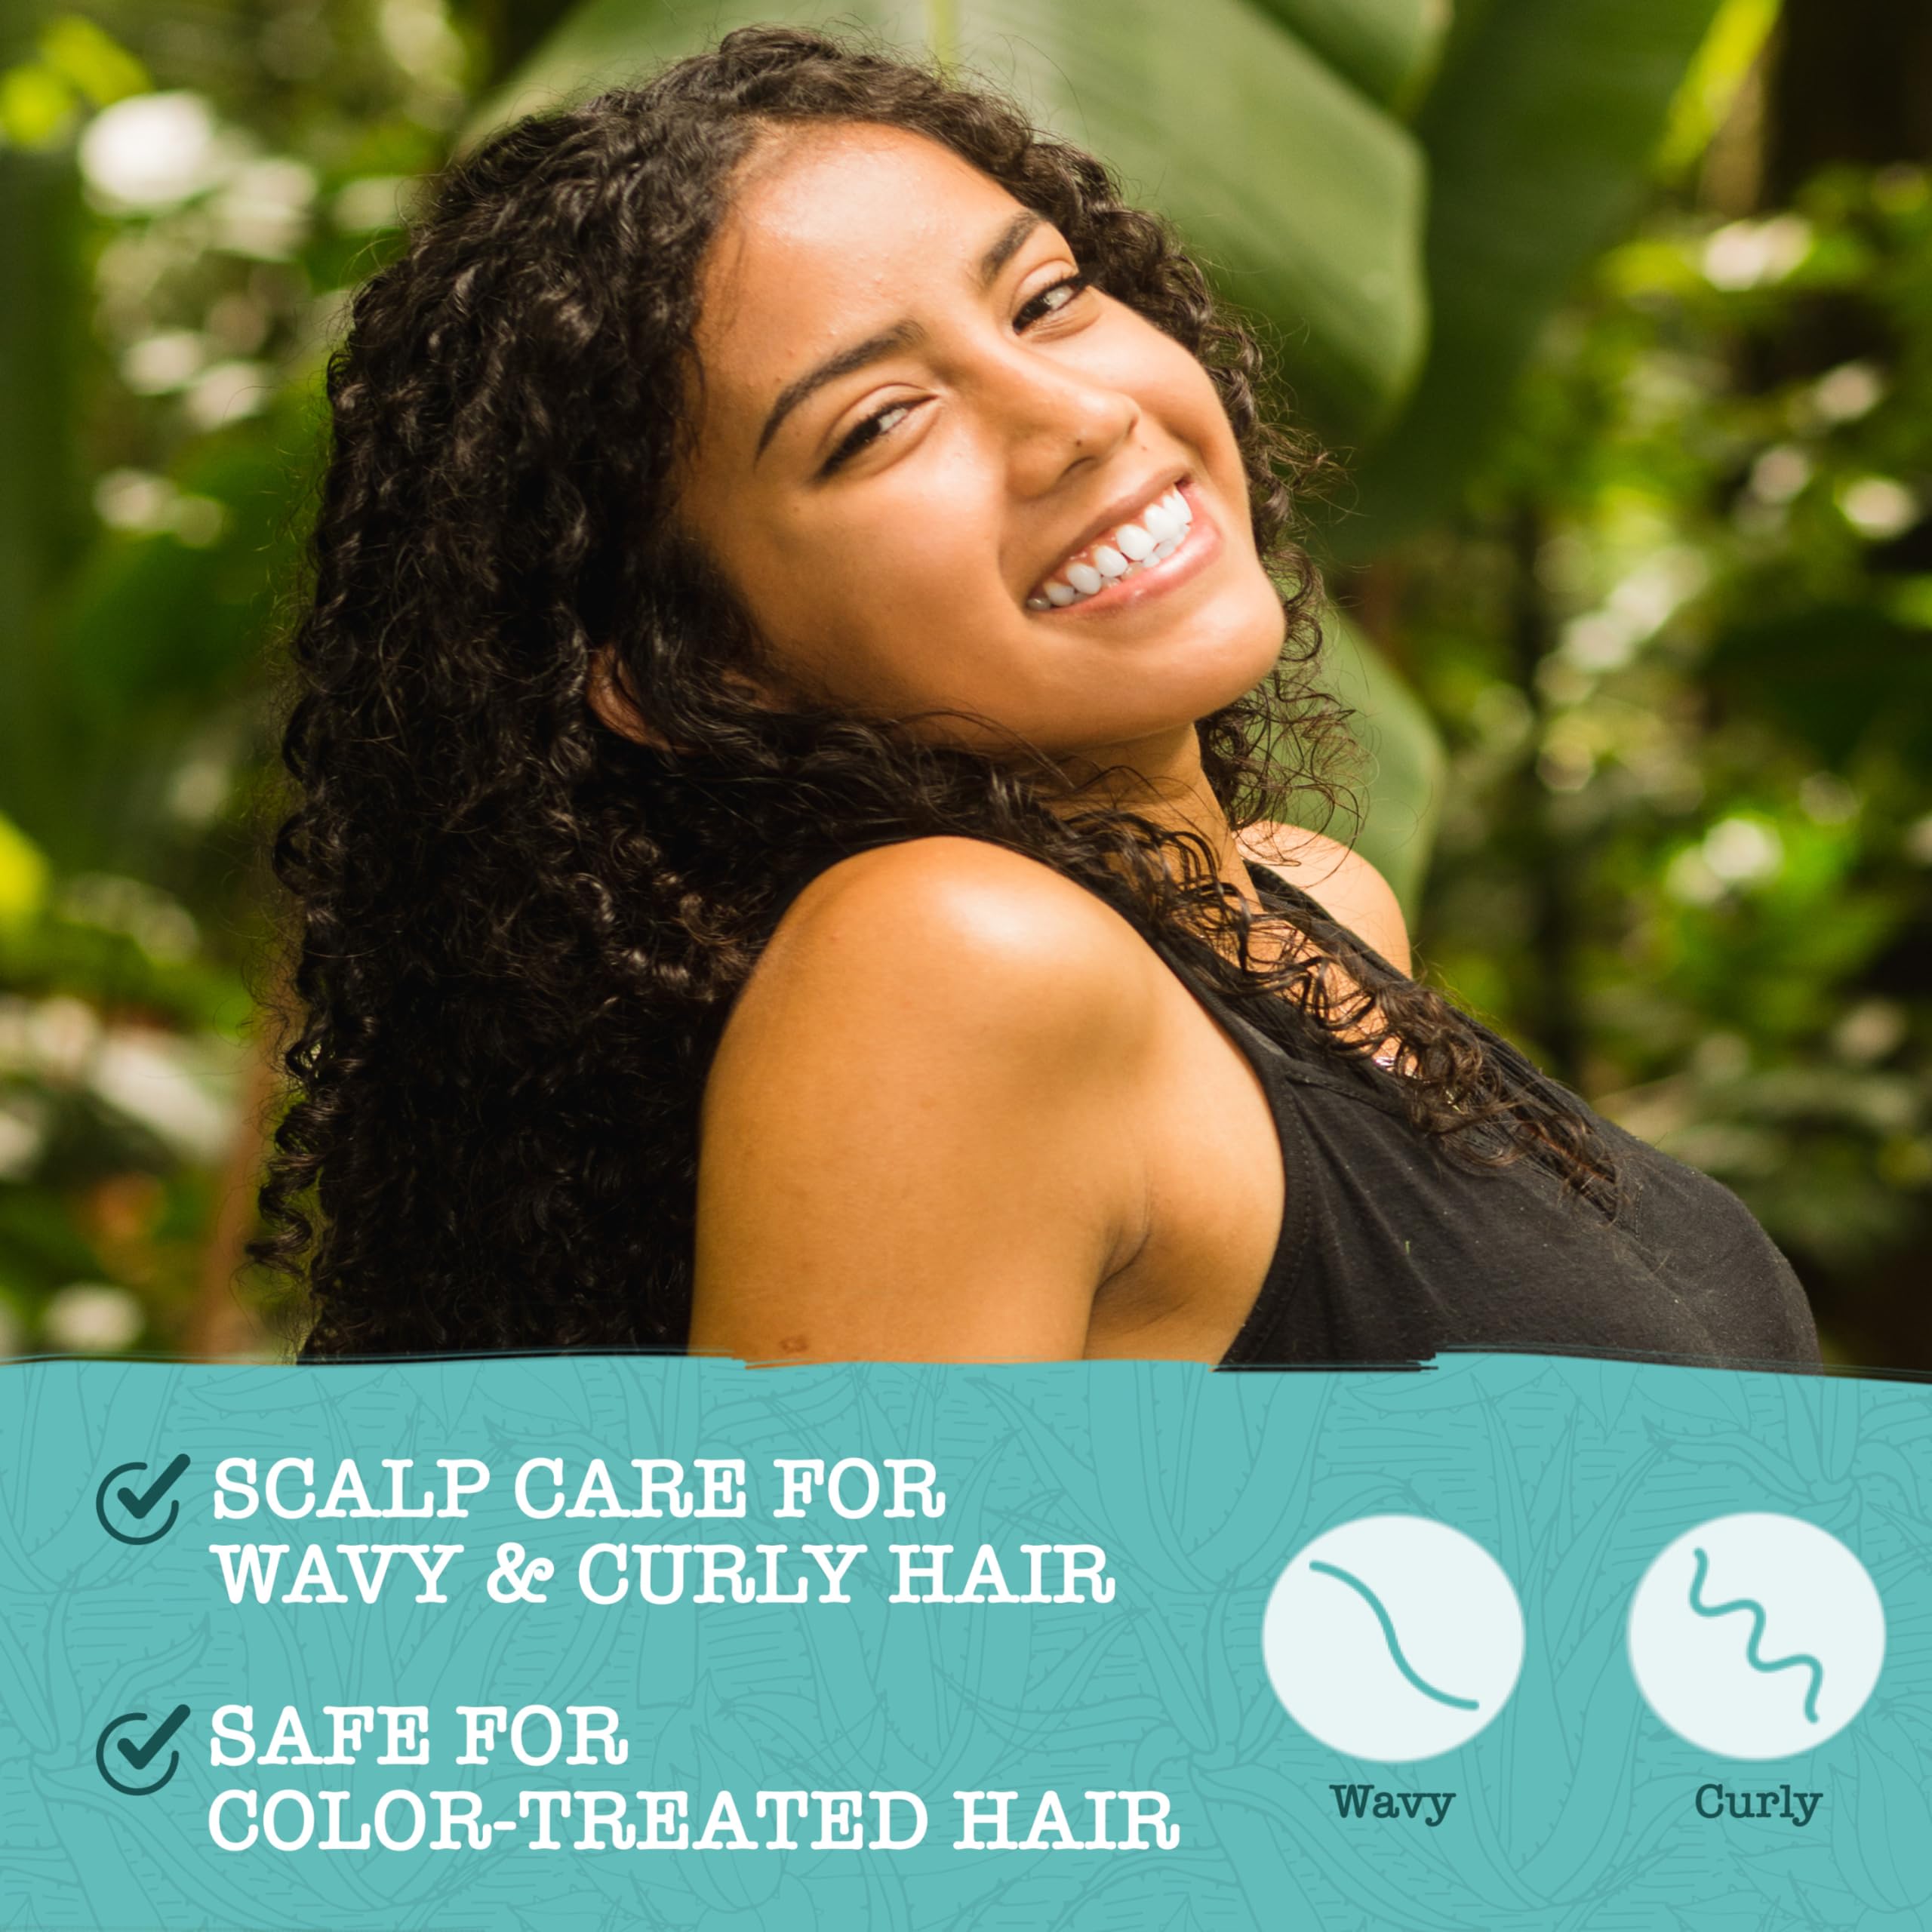 Maui Moisture Scalp Care Clarifying Shampoo, Apple Cider Vinegar Curly Hair Shampoo Moisturizes & Removes Scalp Build-Up, Sulfate-Free Surfactants, 13 fl. oz